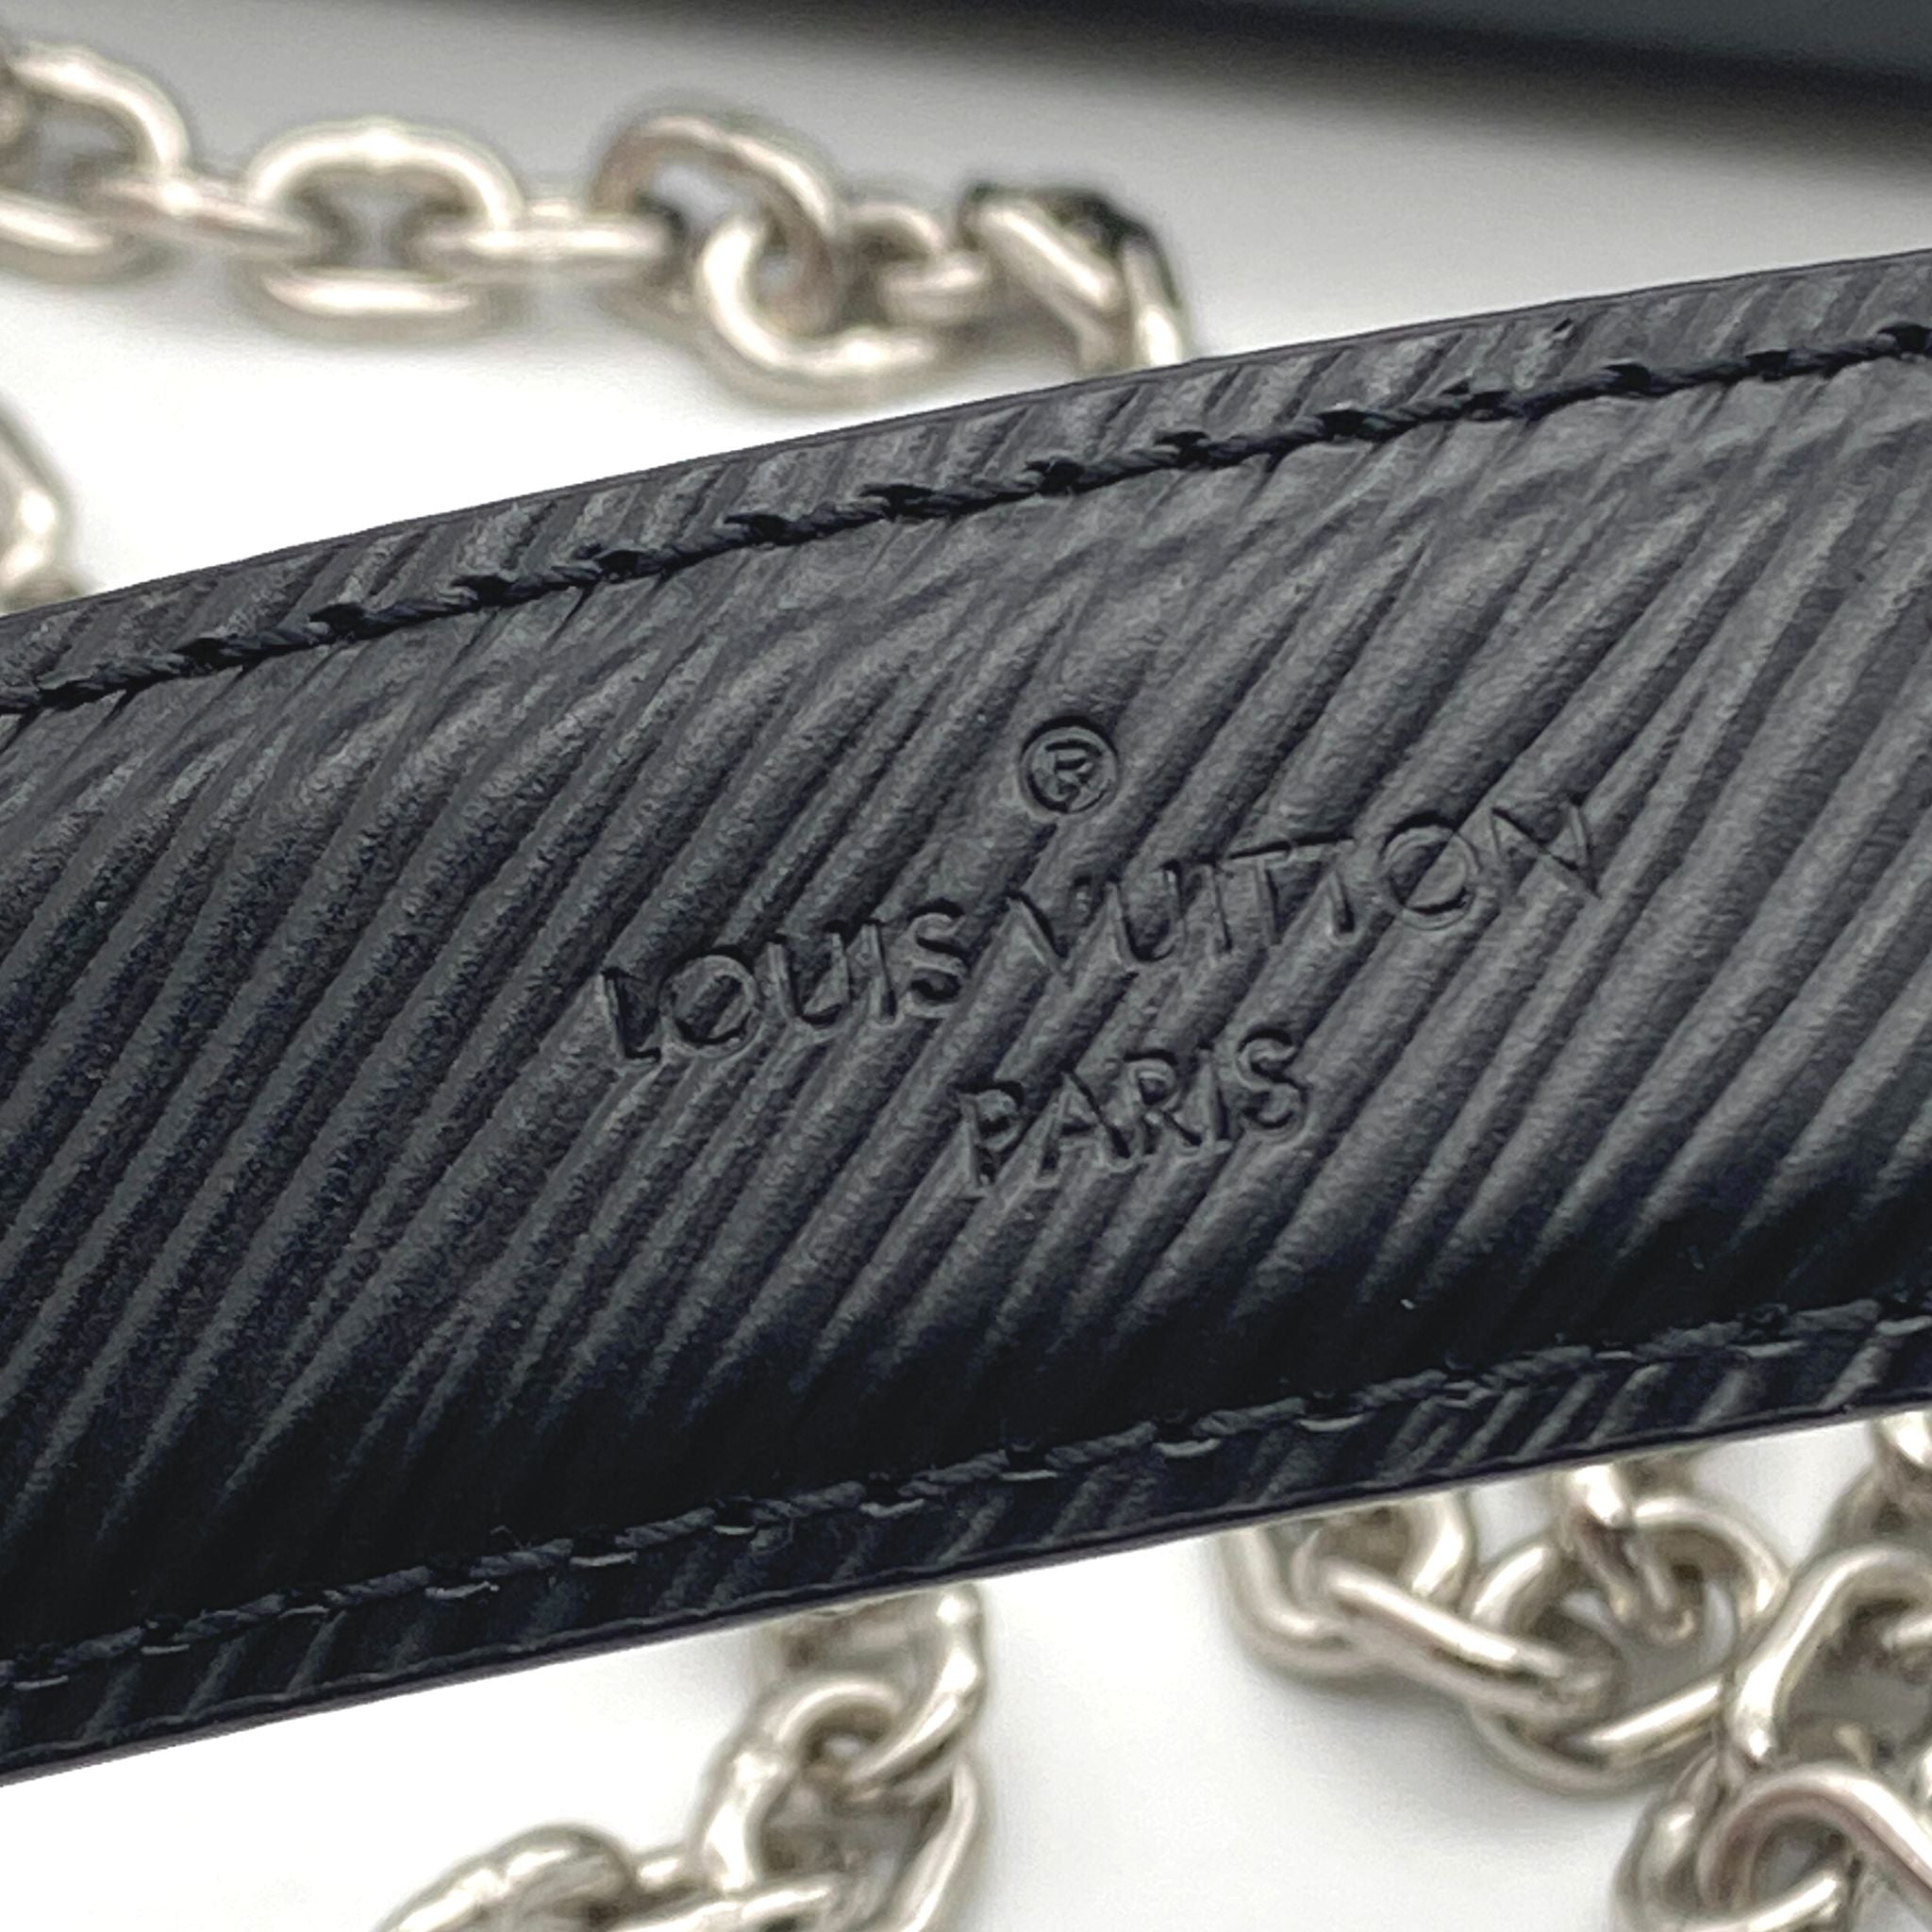 Louis Vuitton Black Epi Leather Twist Wallet on Chain Bag